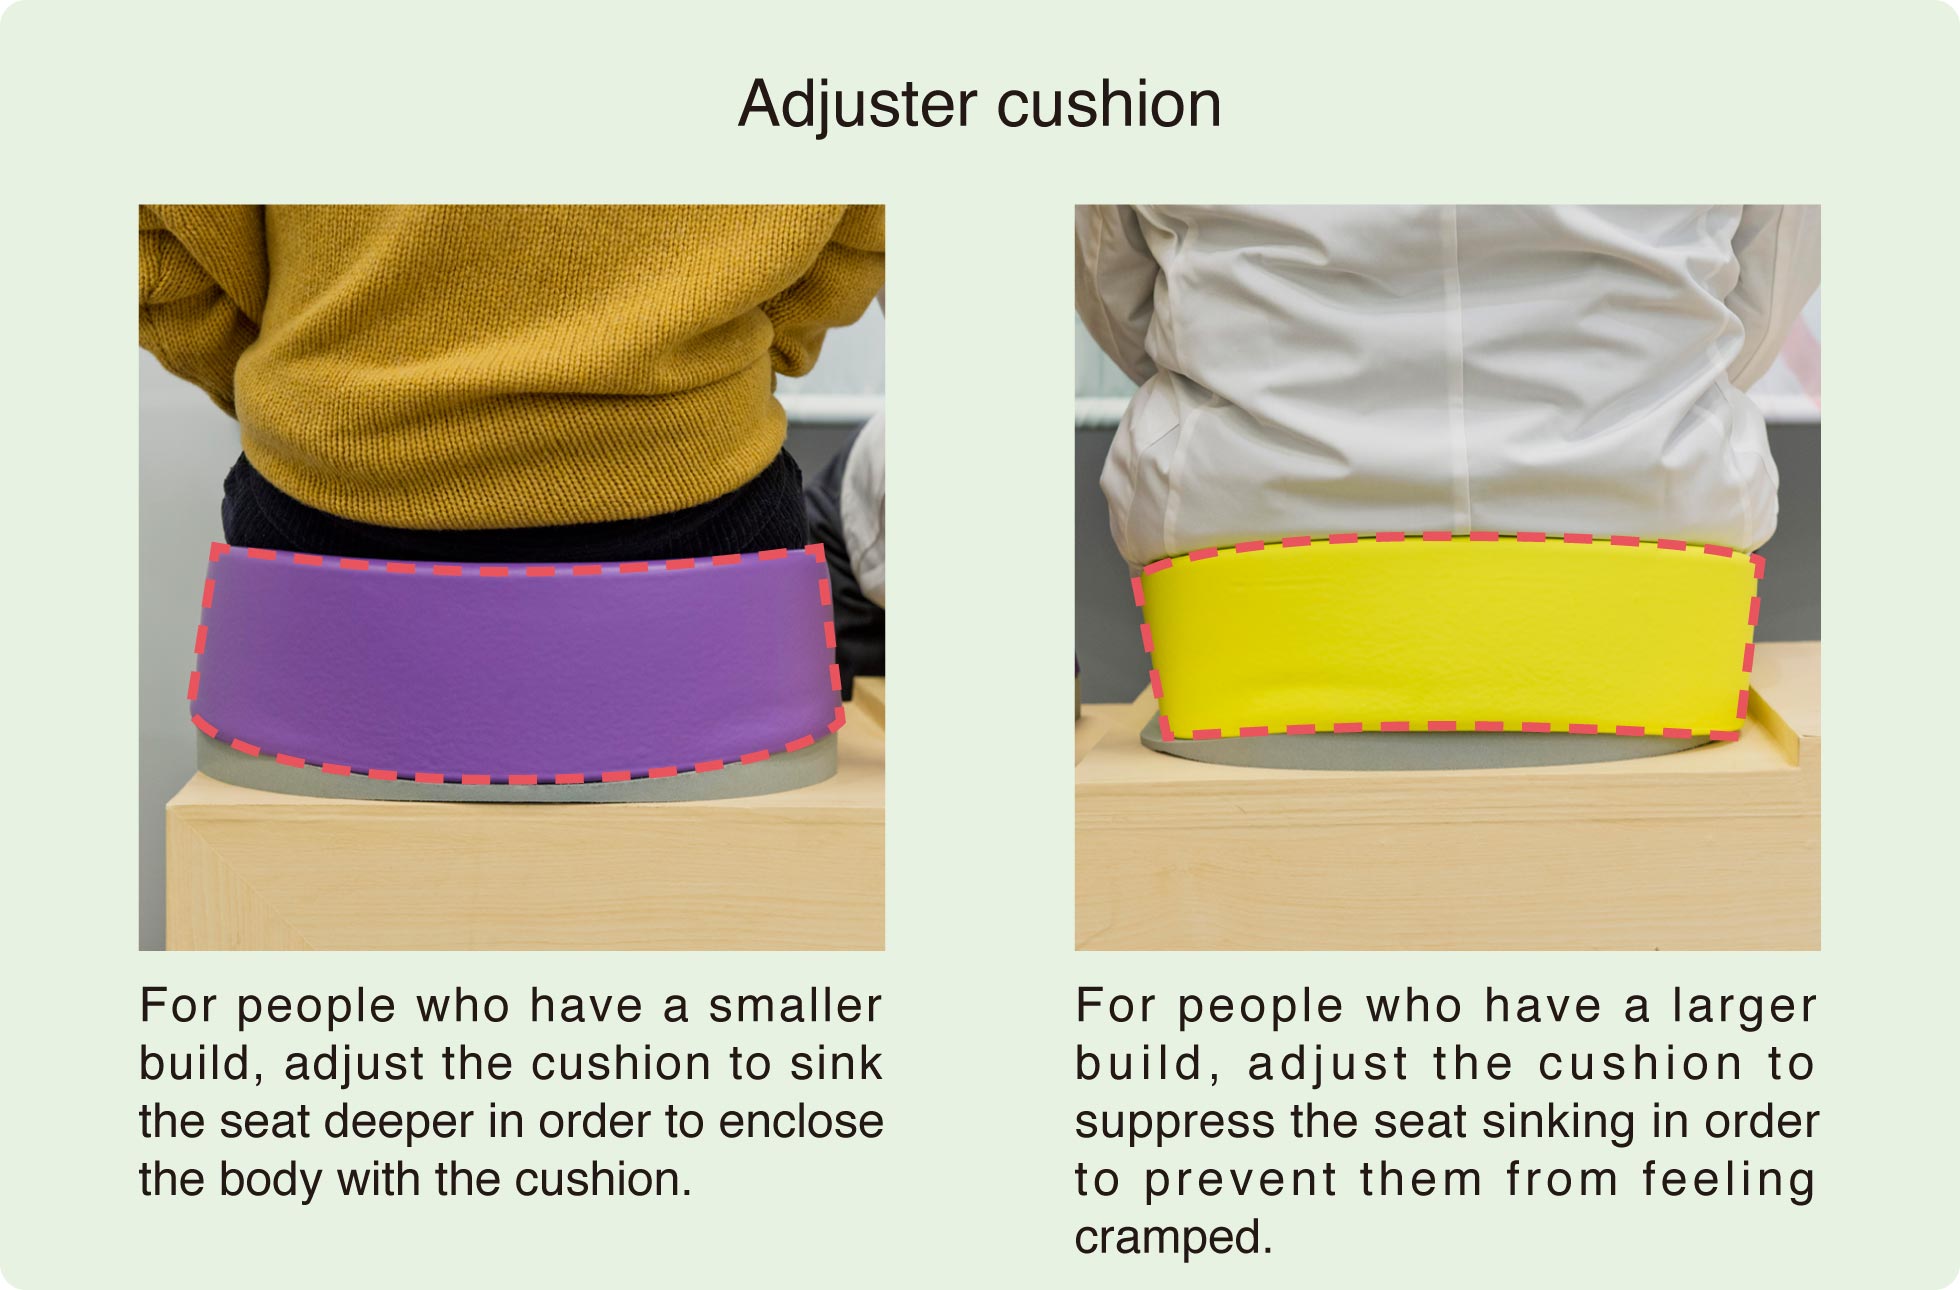 Adjuster cushion